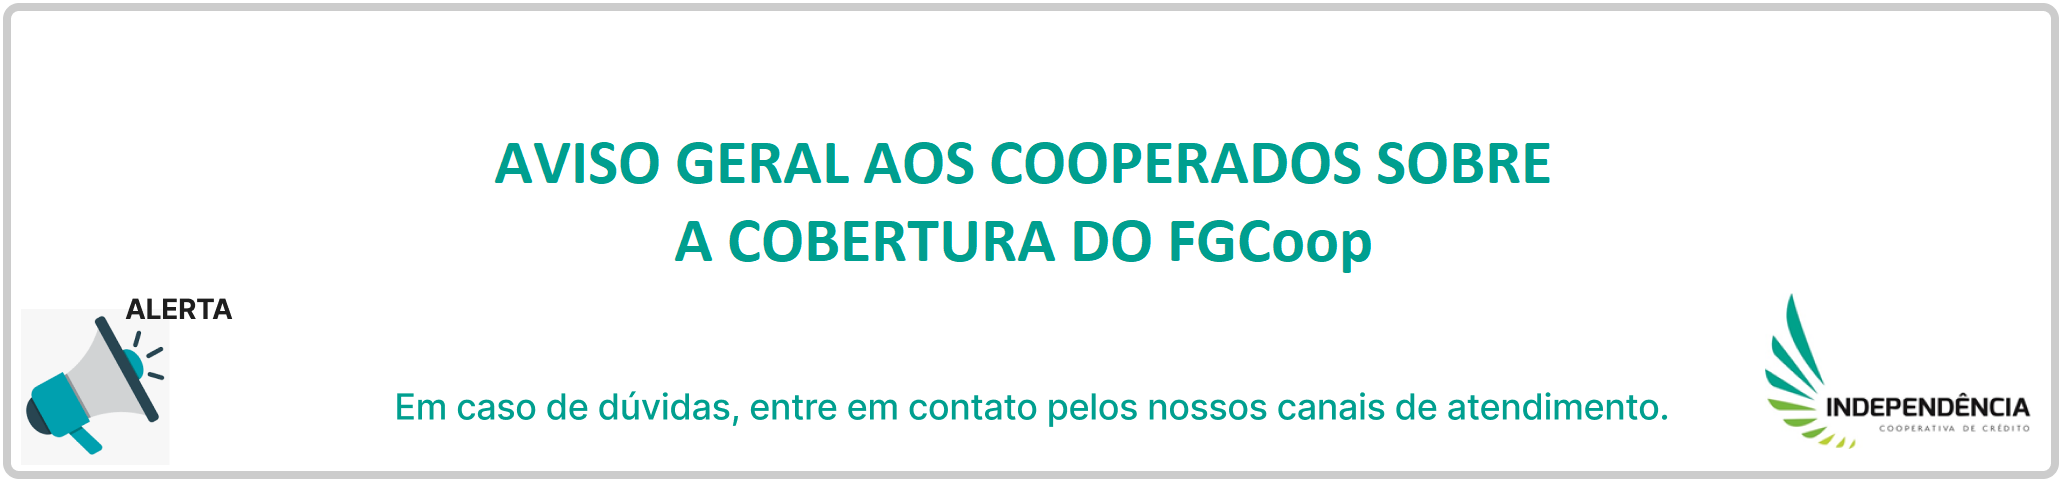 Aviso Geral aos Cooperados sobre a Cobertura do FGCoop